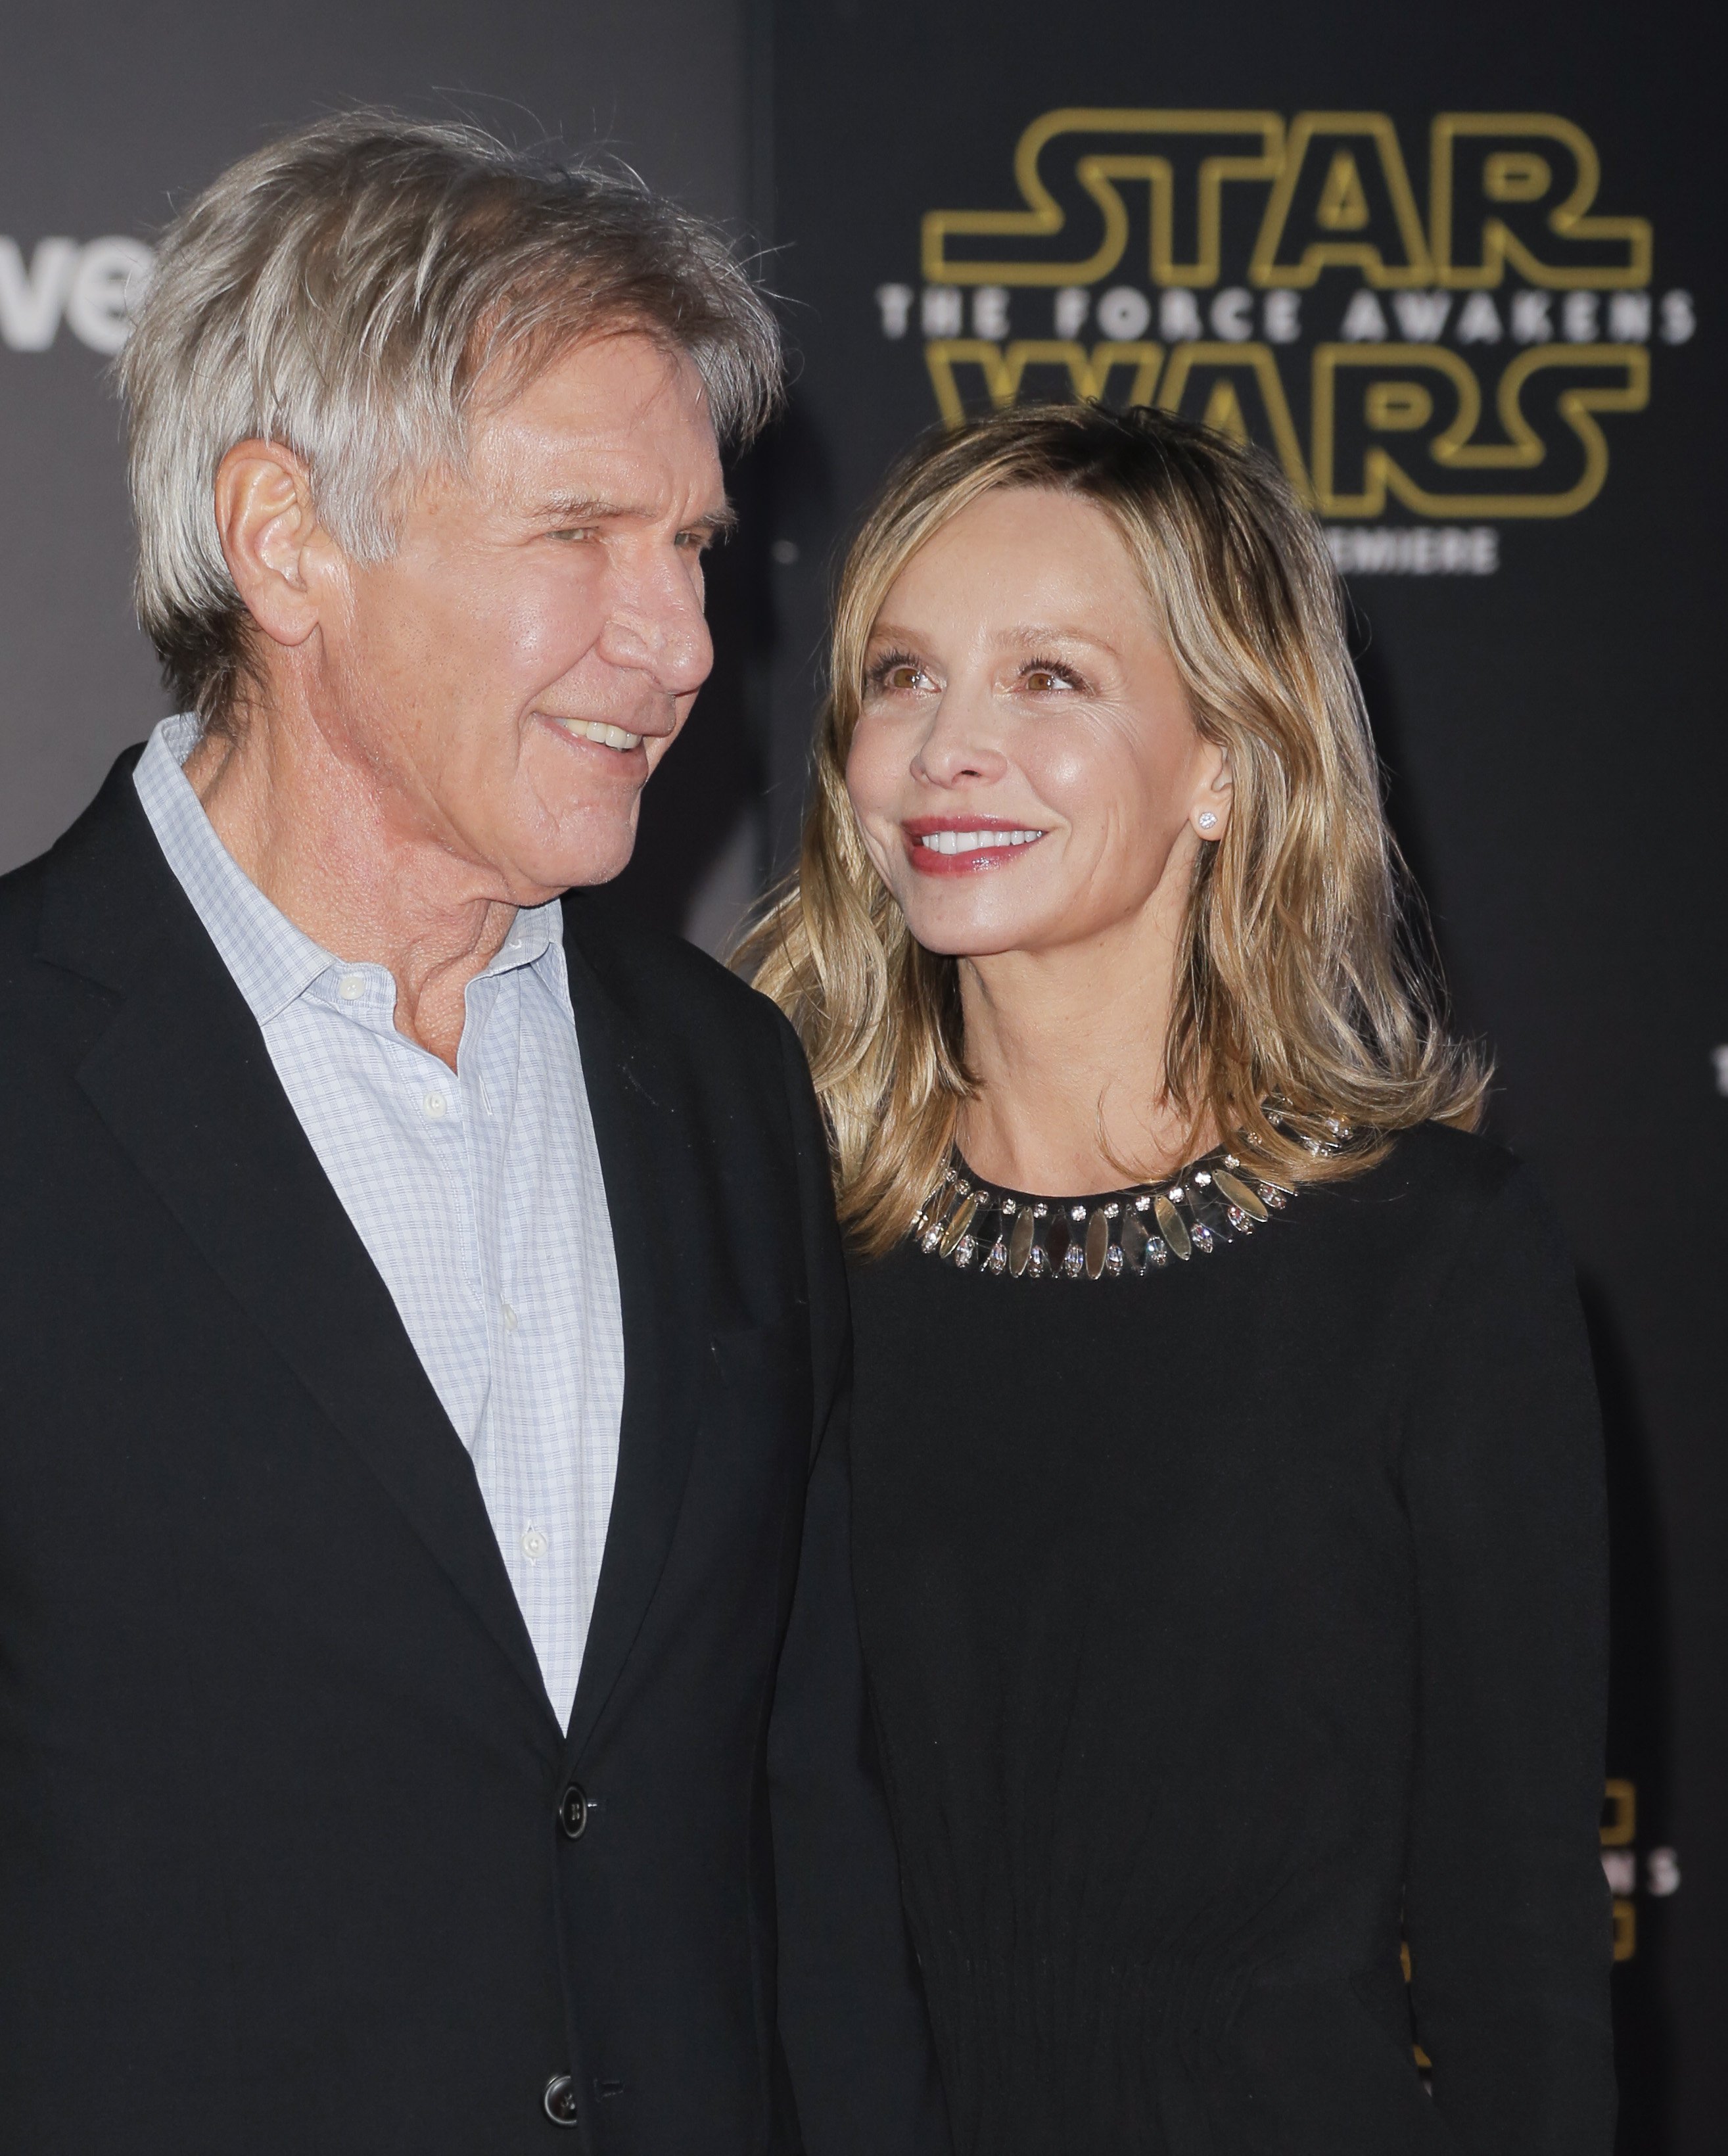 Harrison Ford y Calista Flockhart en la premiere de "Star Wars: The Force Awakens", en Los Ángeles, el 14 de diciembre de 2015 | Foto: Getty Images